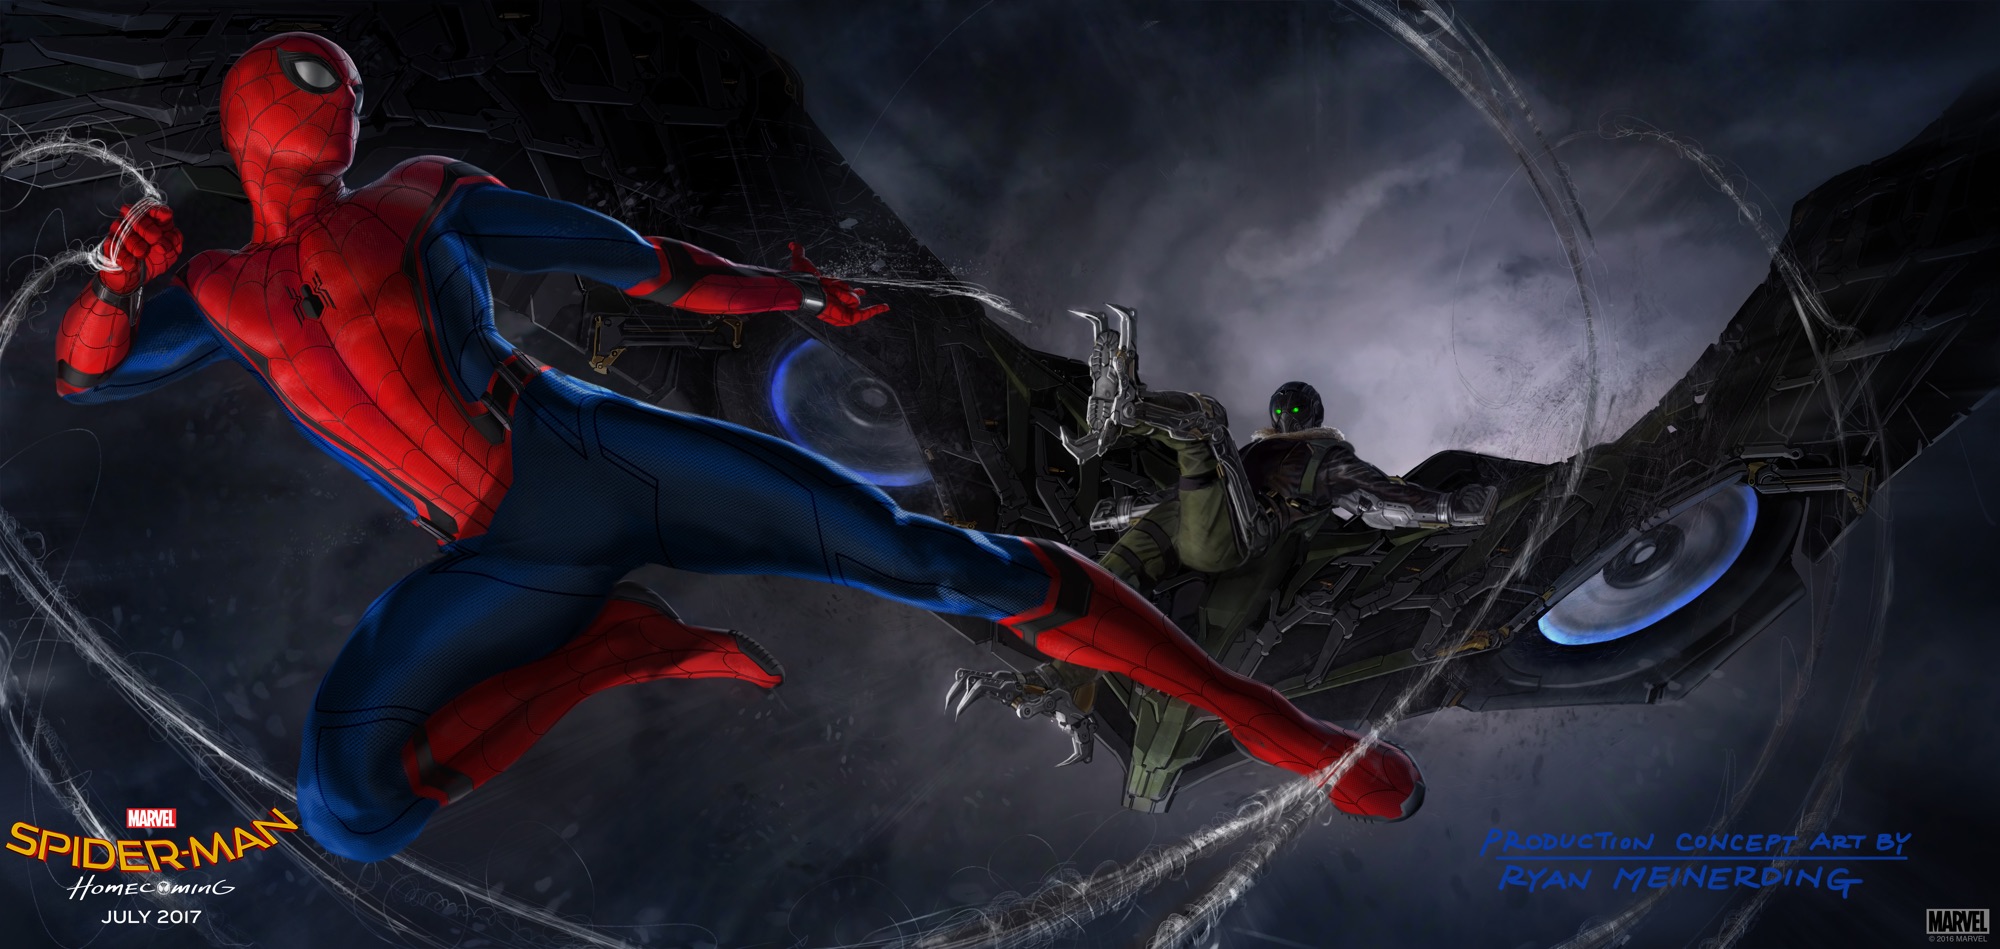 Spider-Man Homecoming concept art by Ryan Meinderding